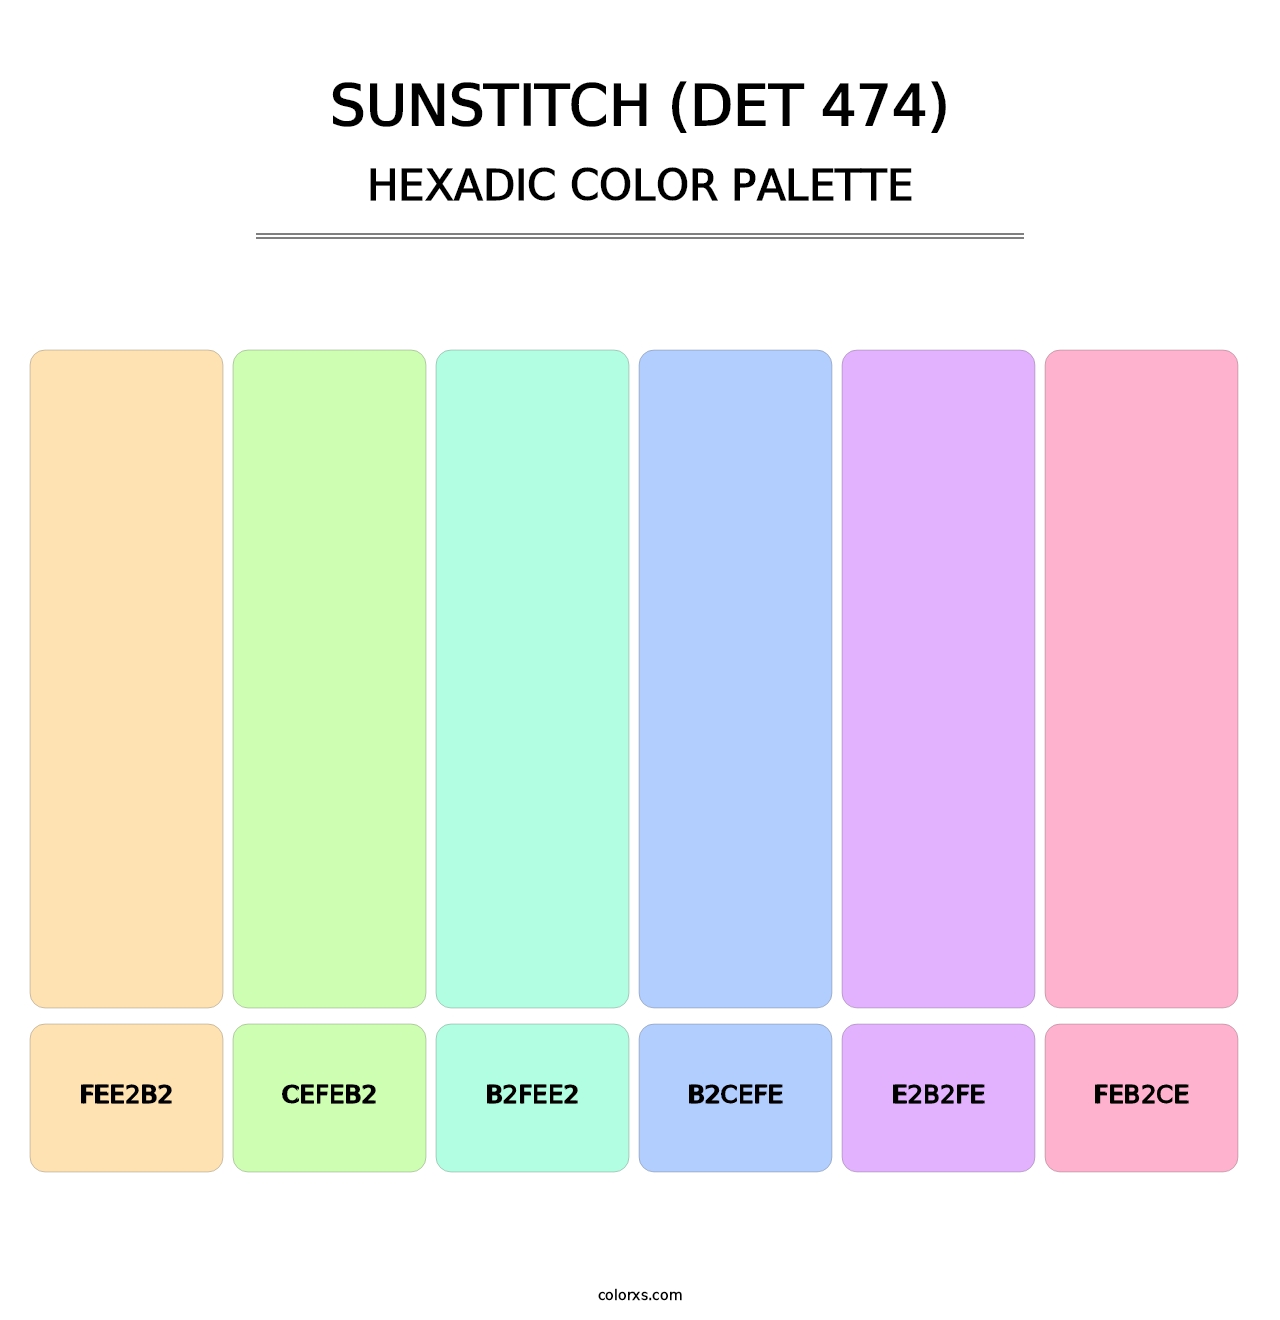 Sunstitch (DET 474) - Hexadic Color Palette